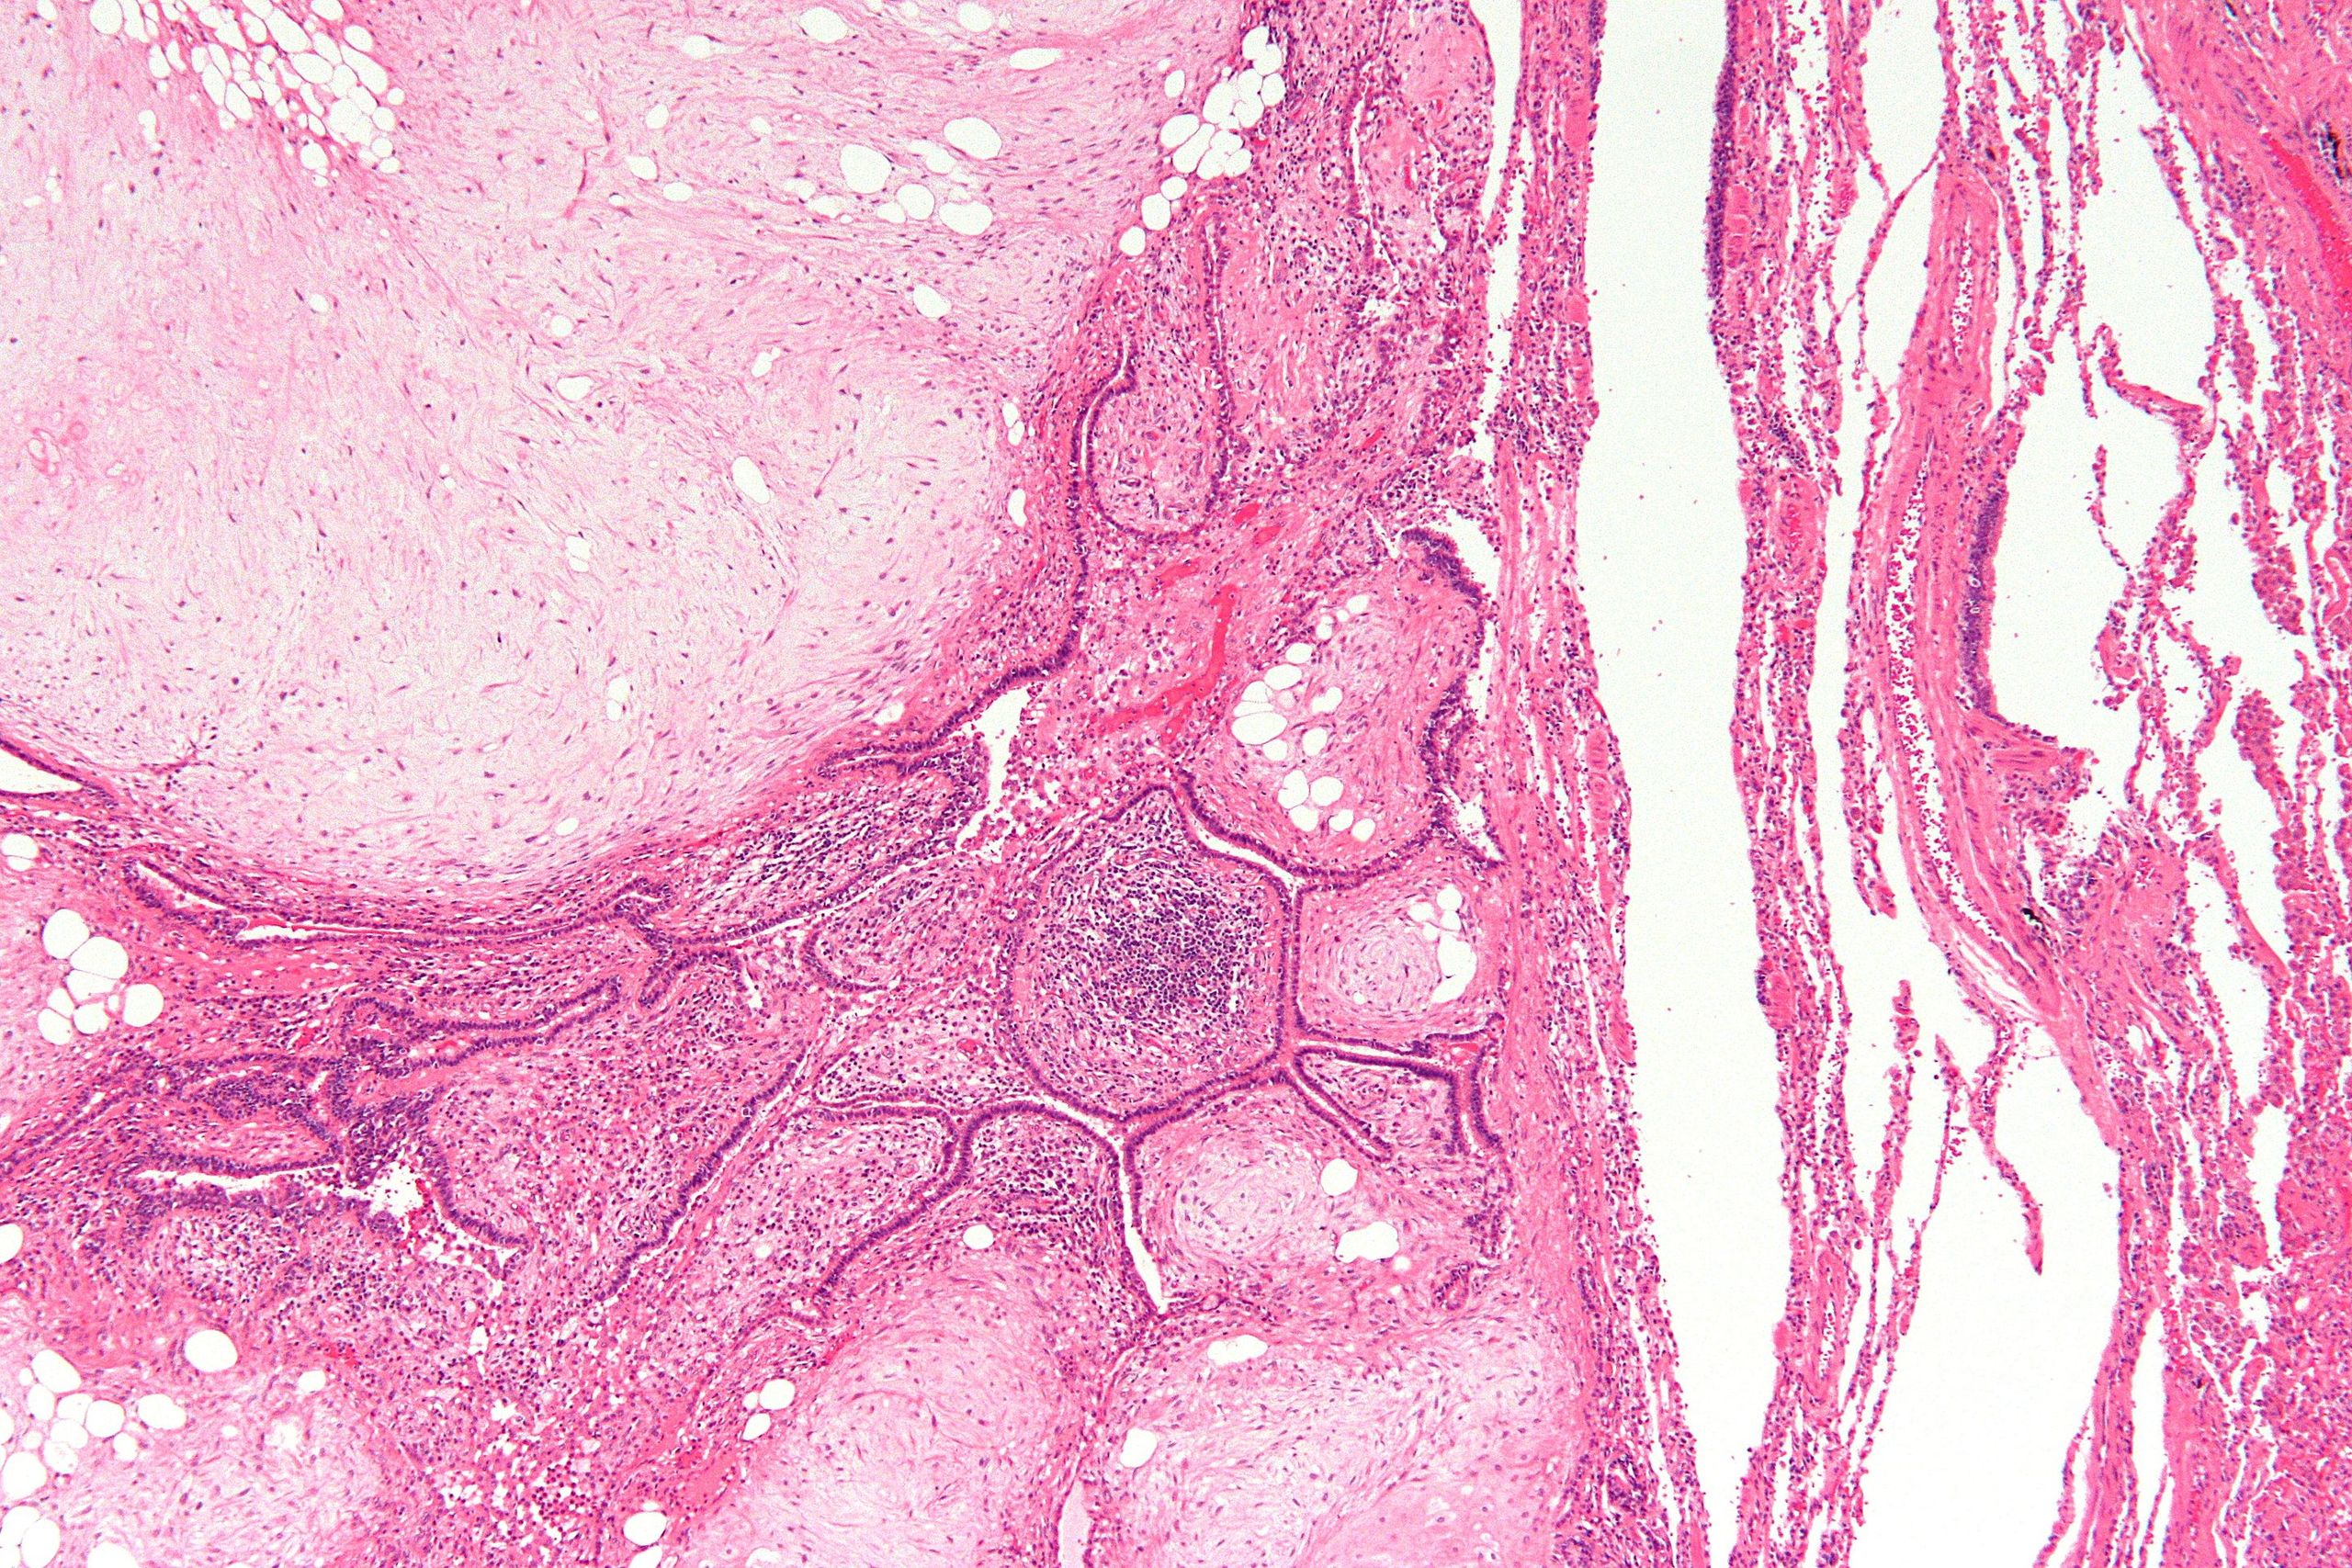 Low magnification micrograph of a pulmonary hamartoma. H&E stain.[10]